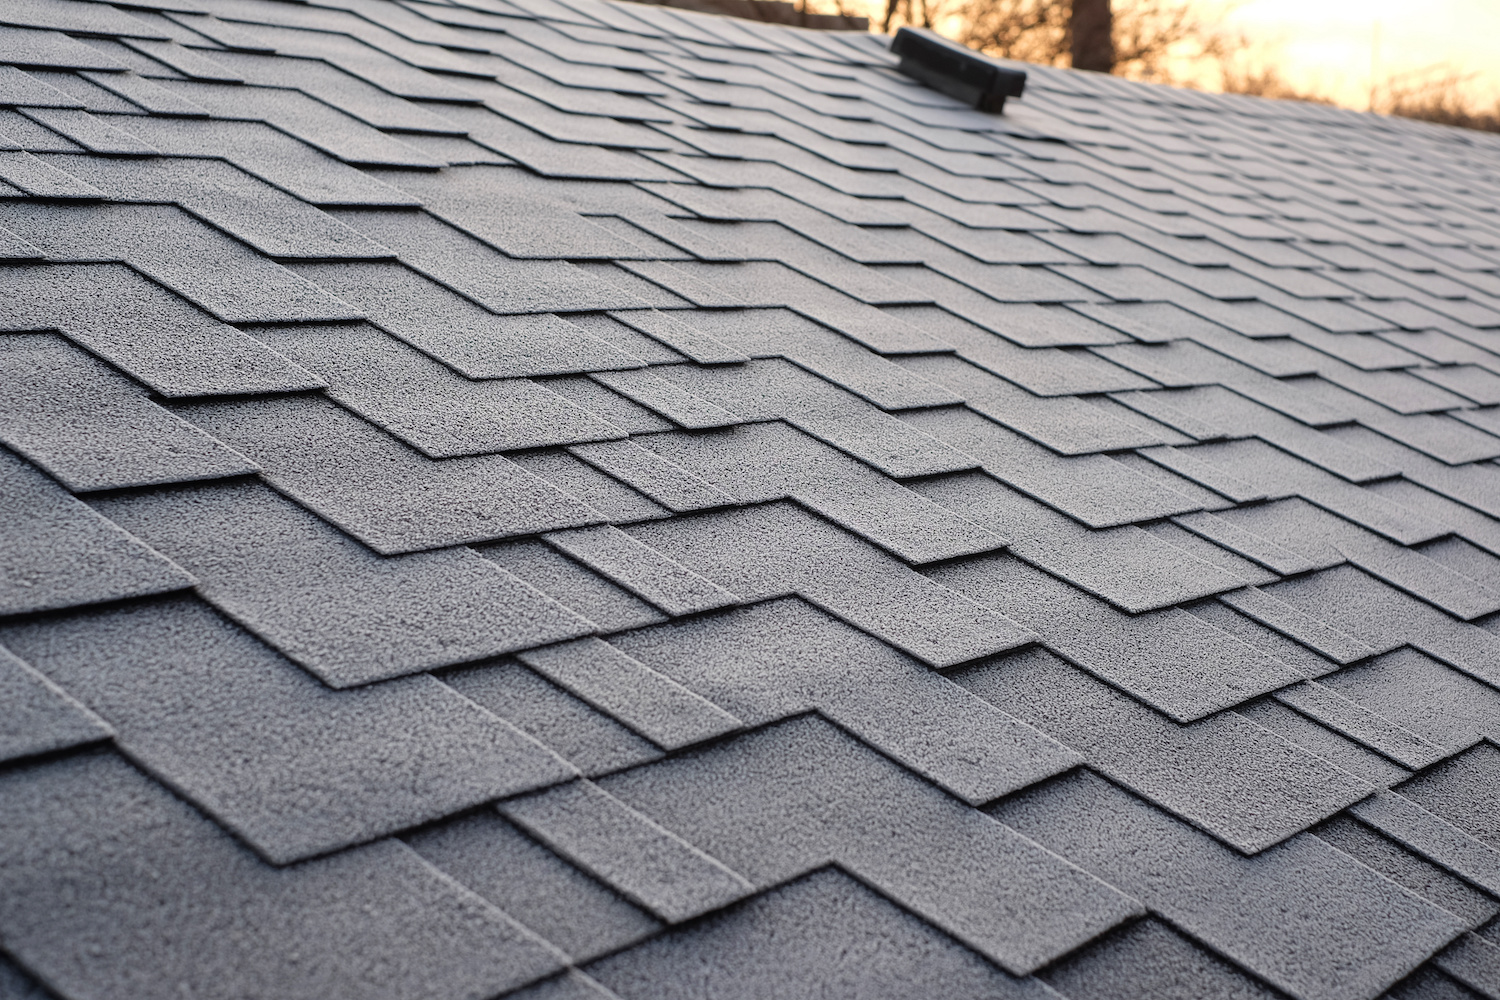 broadmoor roofing company shingles